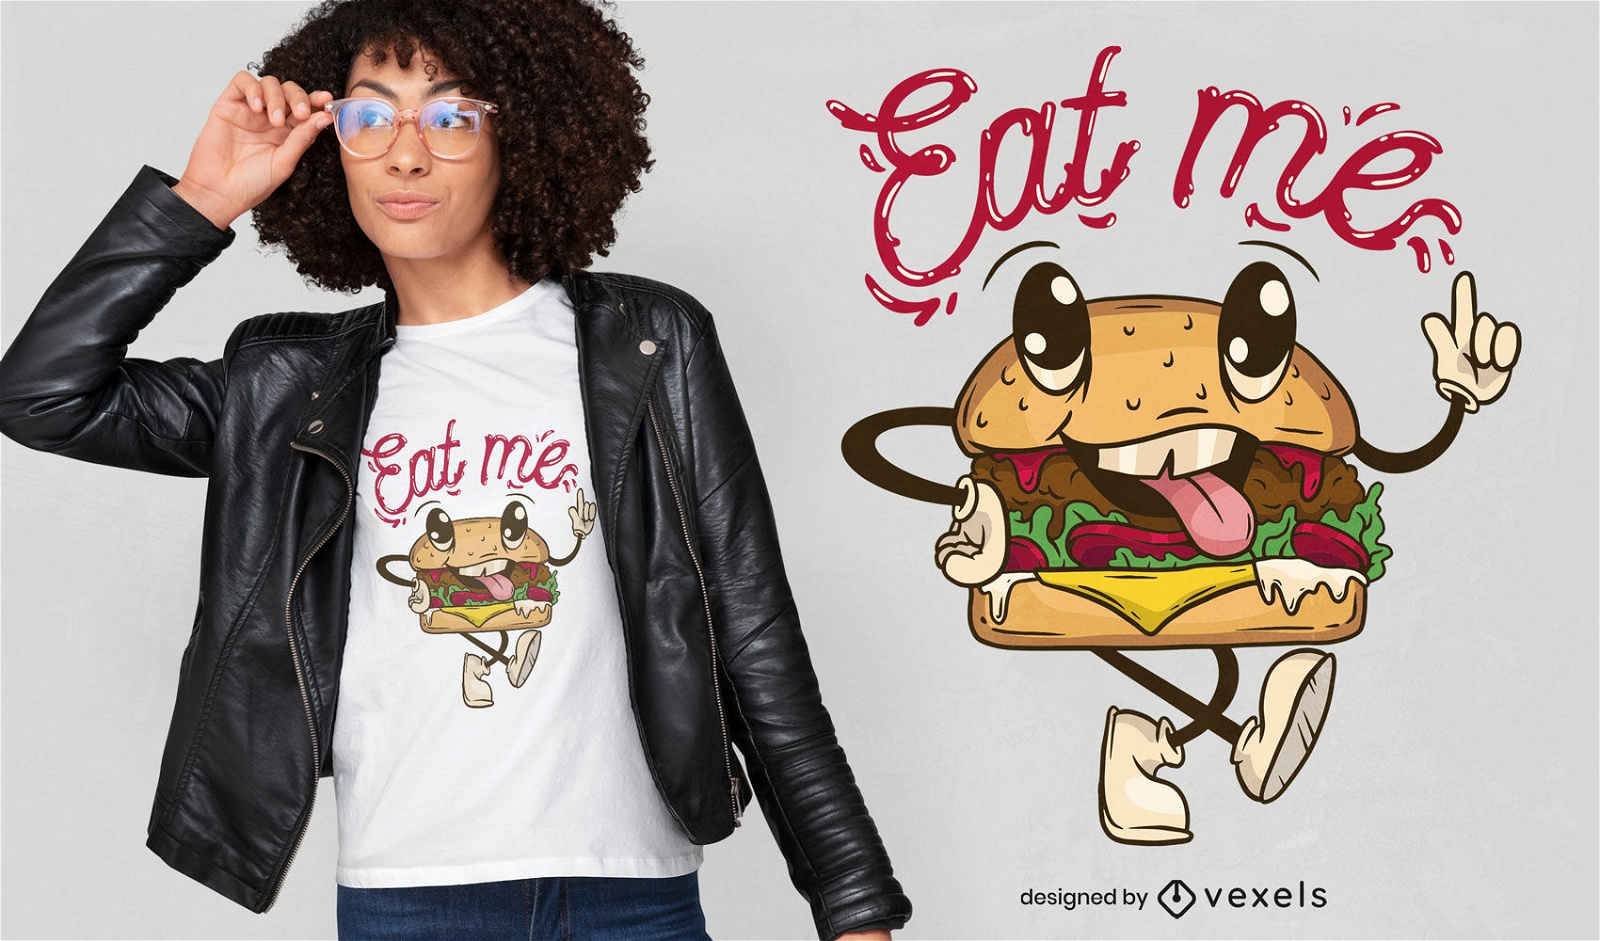 Dise?o de camiseta de personaje de dibujos animados retro de hamburguesa